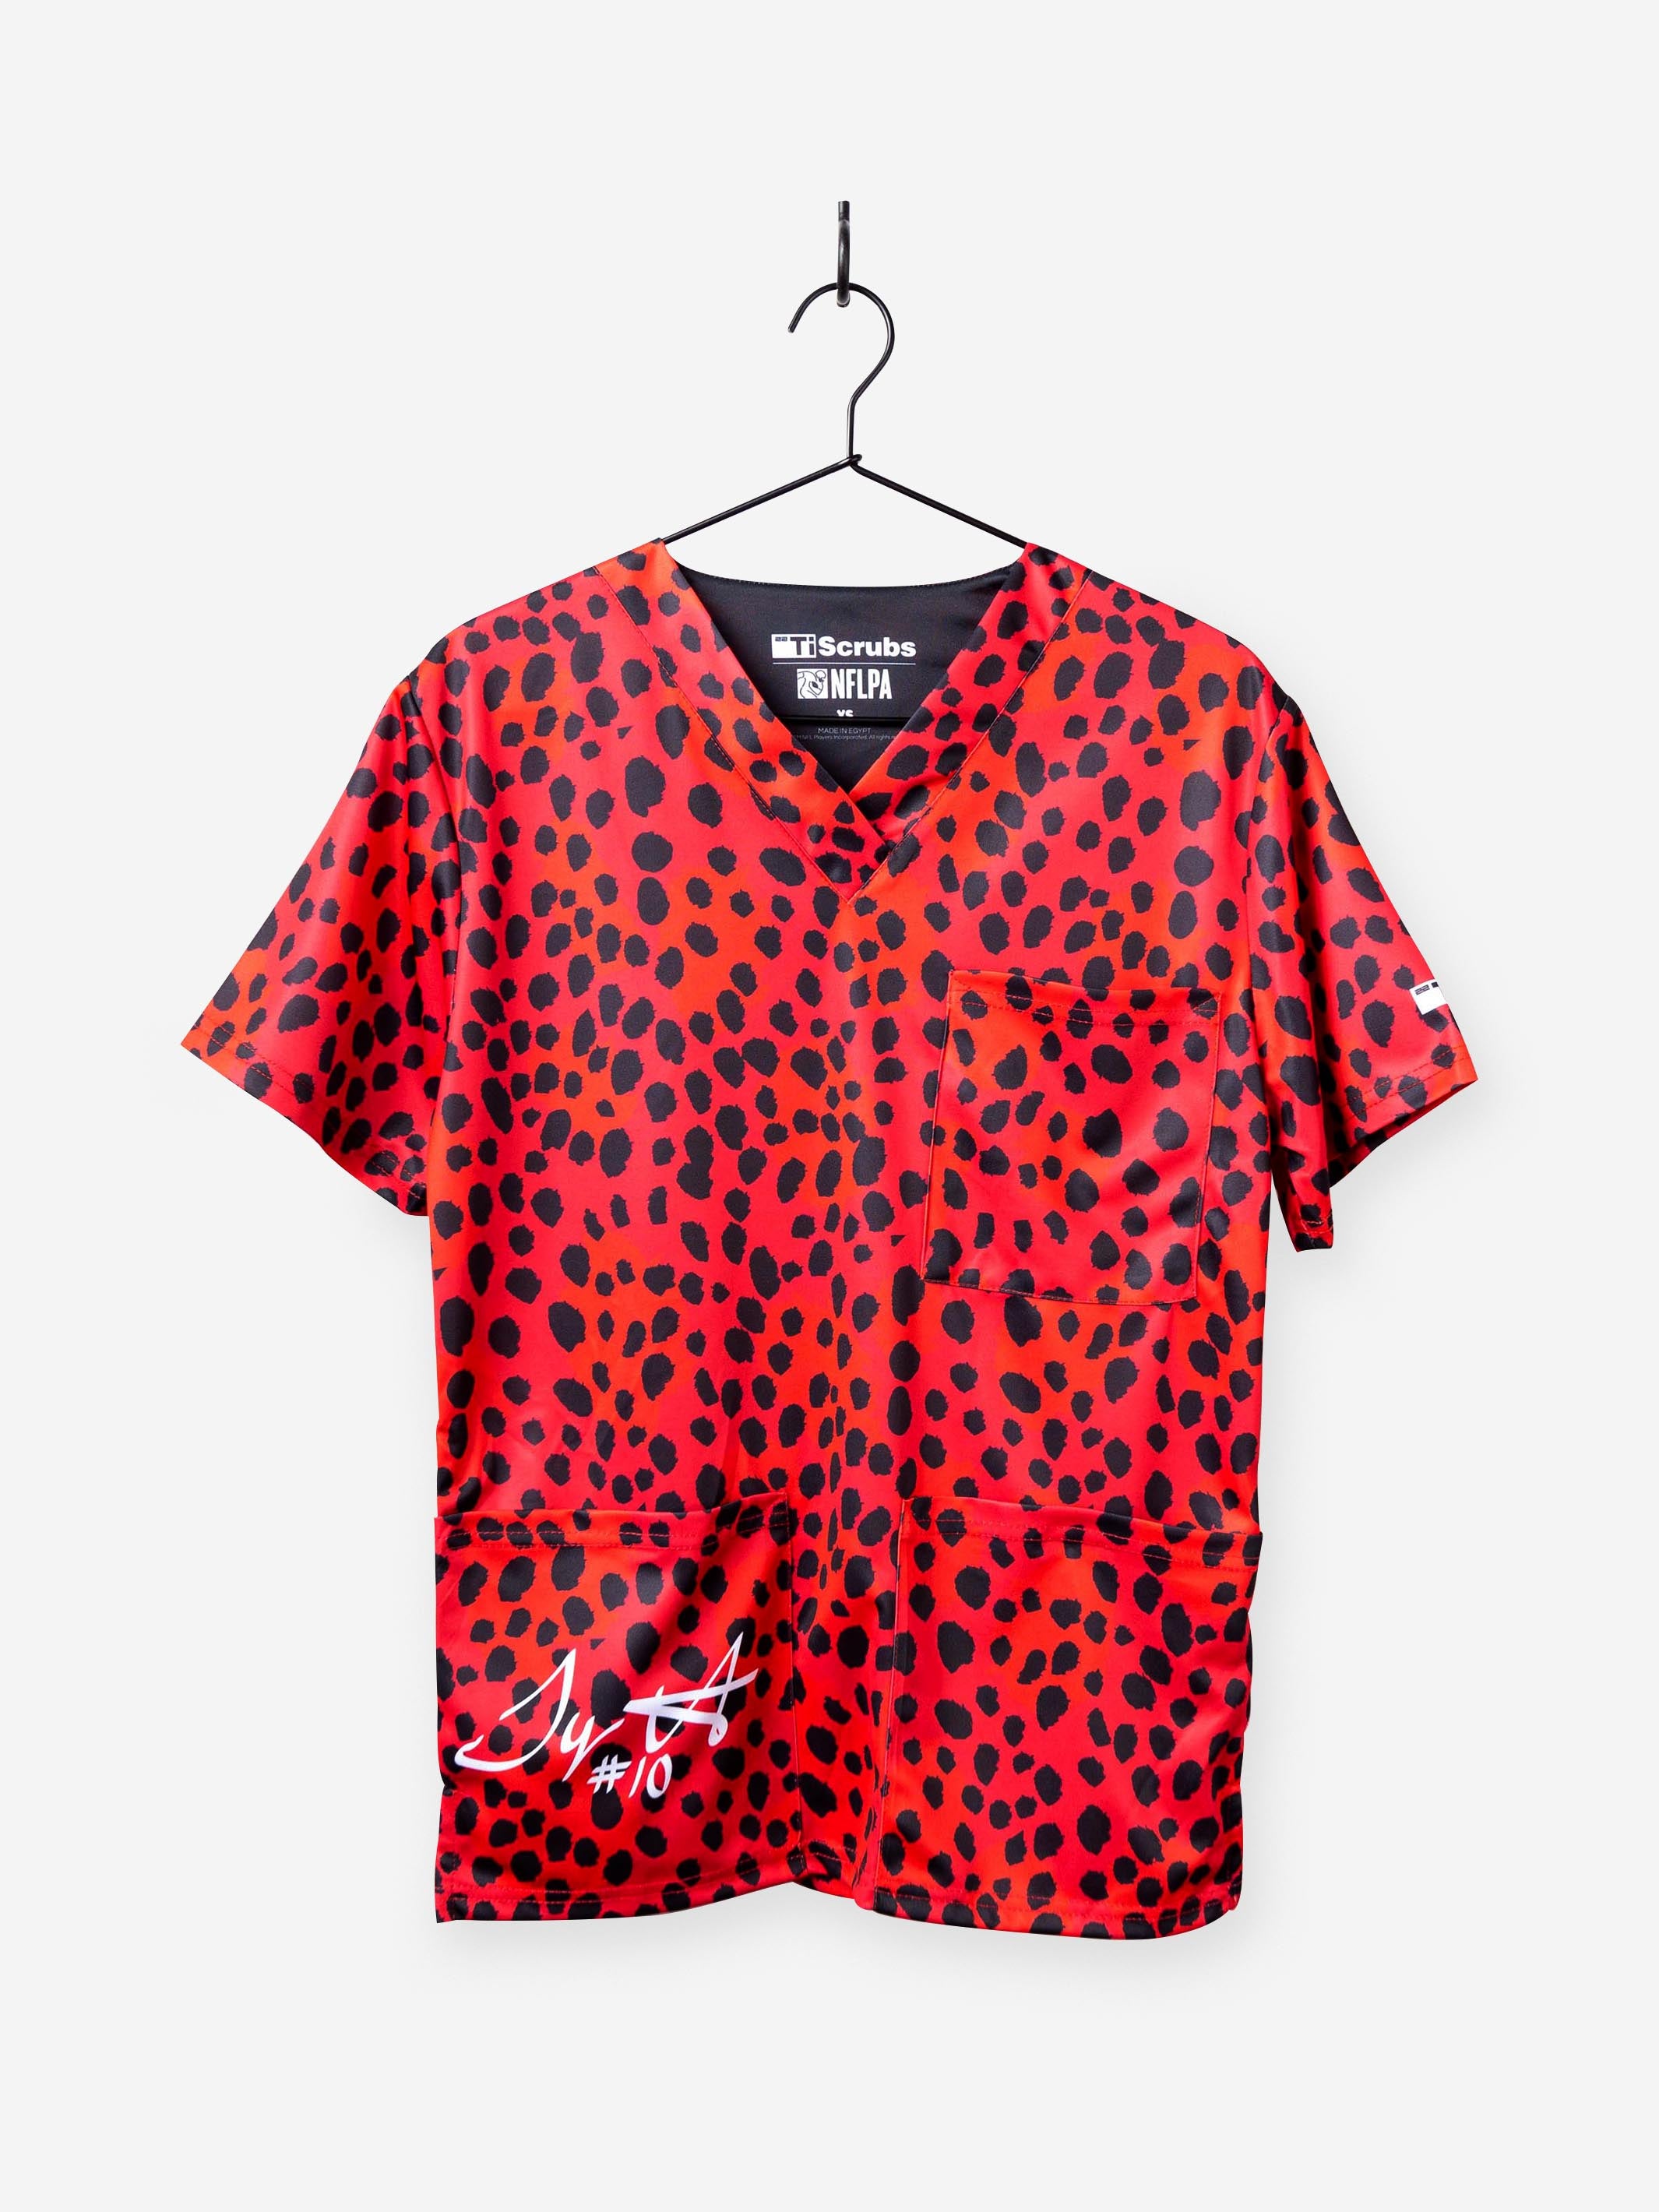 Men&#39;s NFL Tyreek Hill Cheetah Print scrub top in red and black